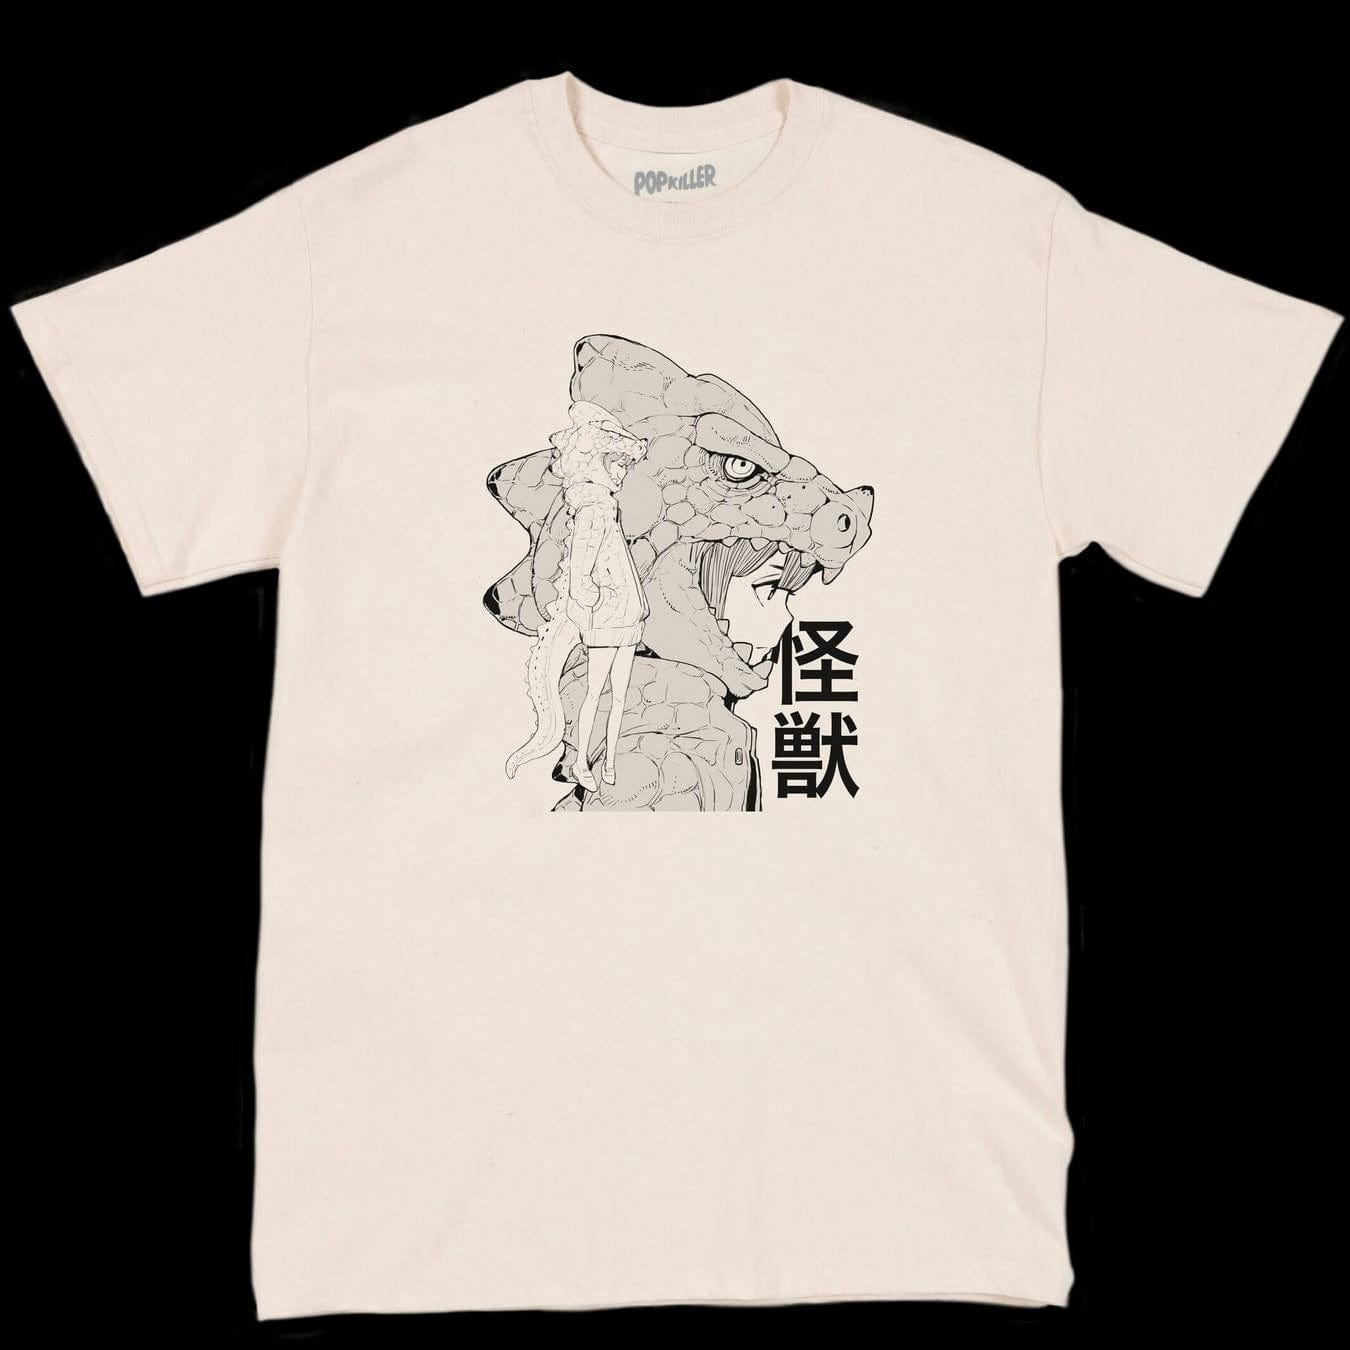 PopKiller Acky Bright Kaijyu Classic T-Shirt Kawaii Gifts